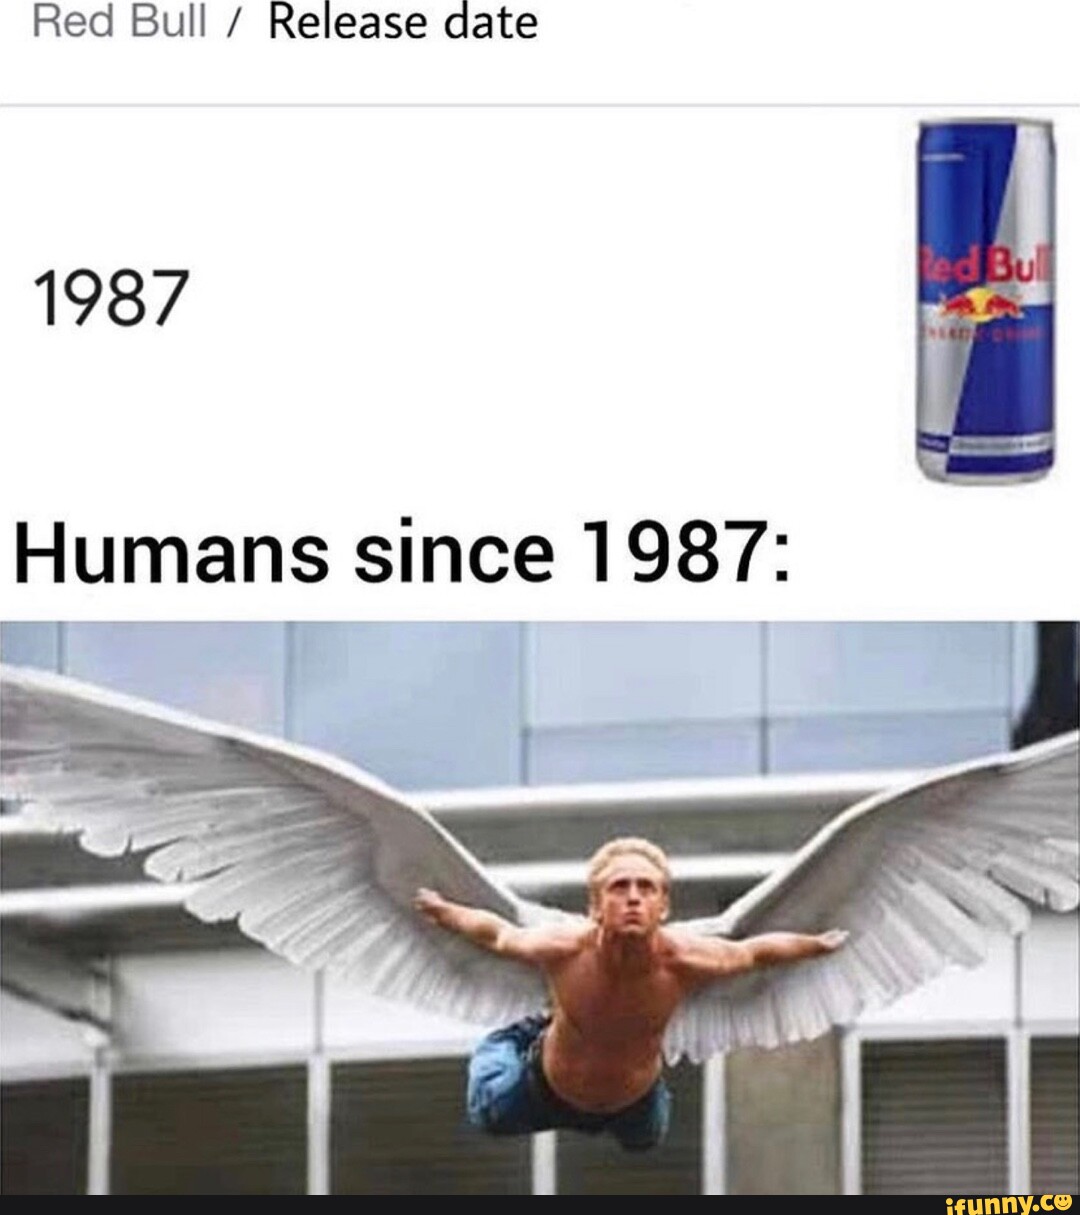 Human since. Since 1987.